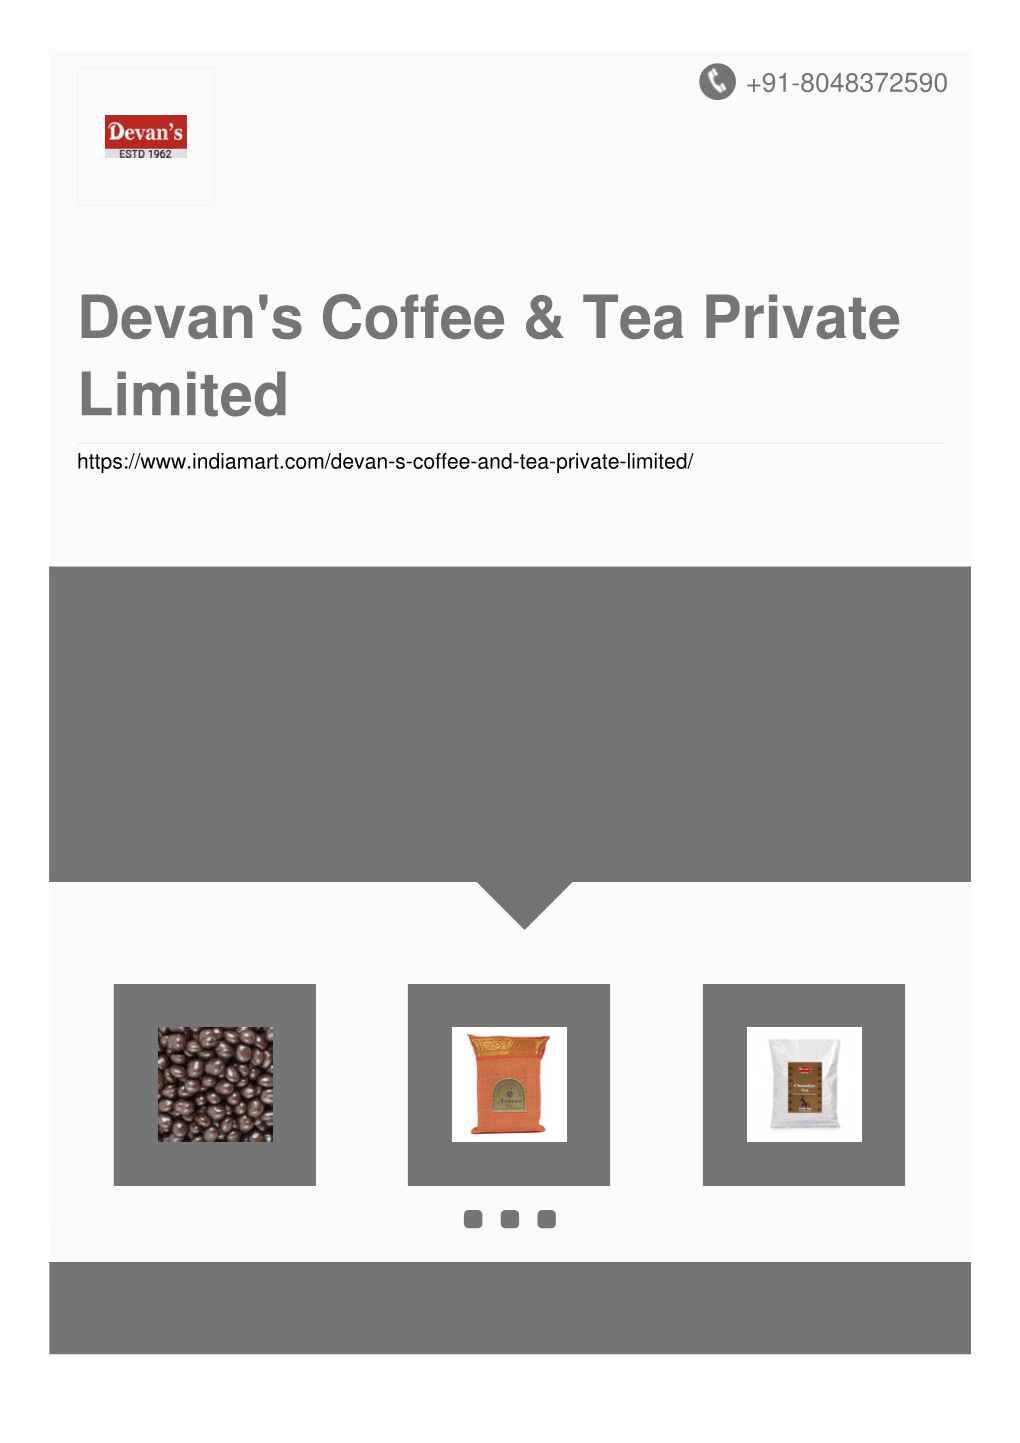 Devan's Coffee & Tea Private Limited